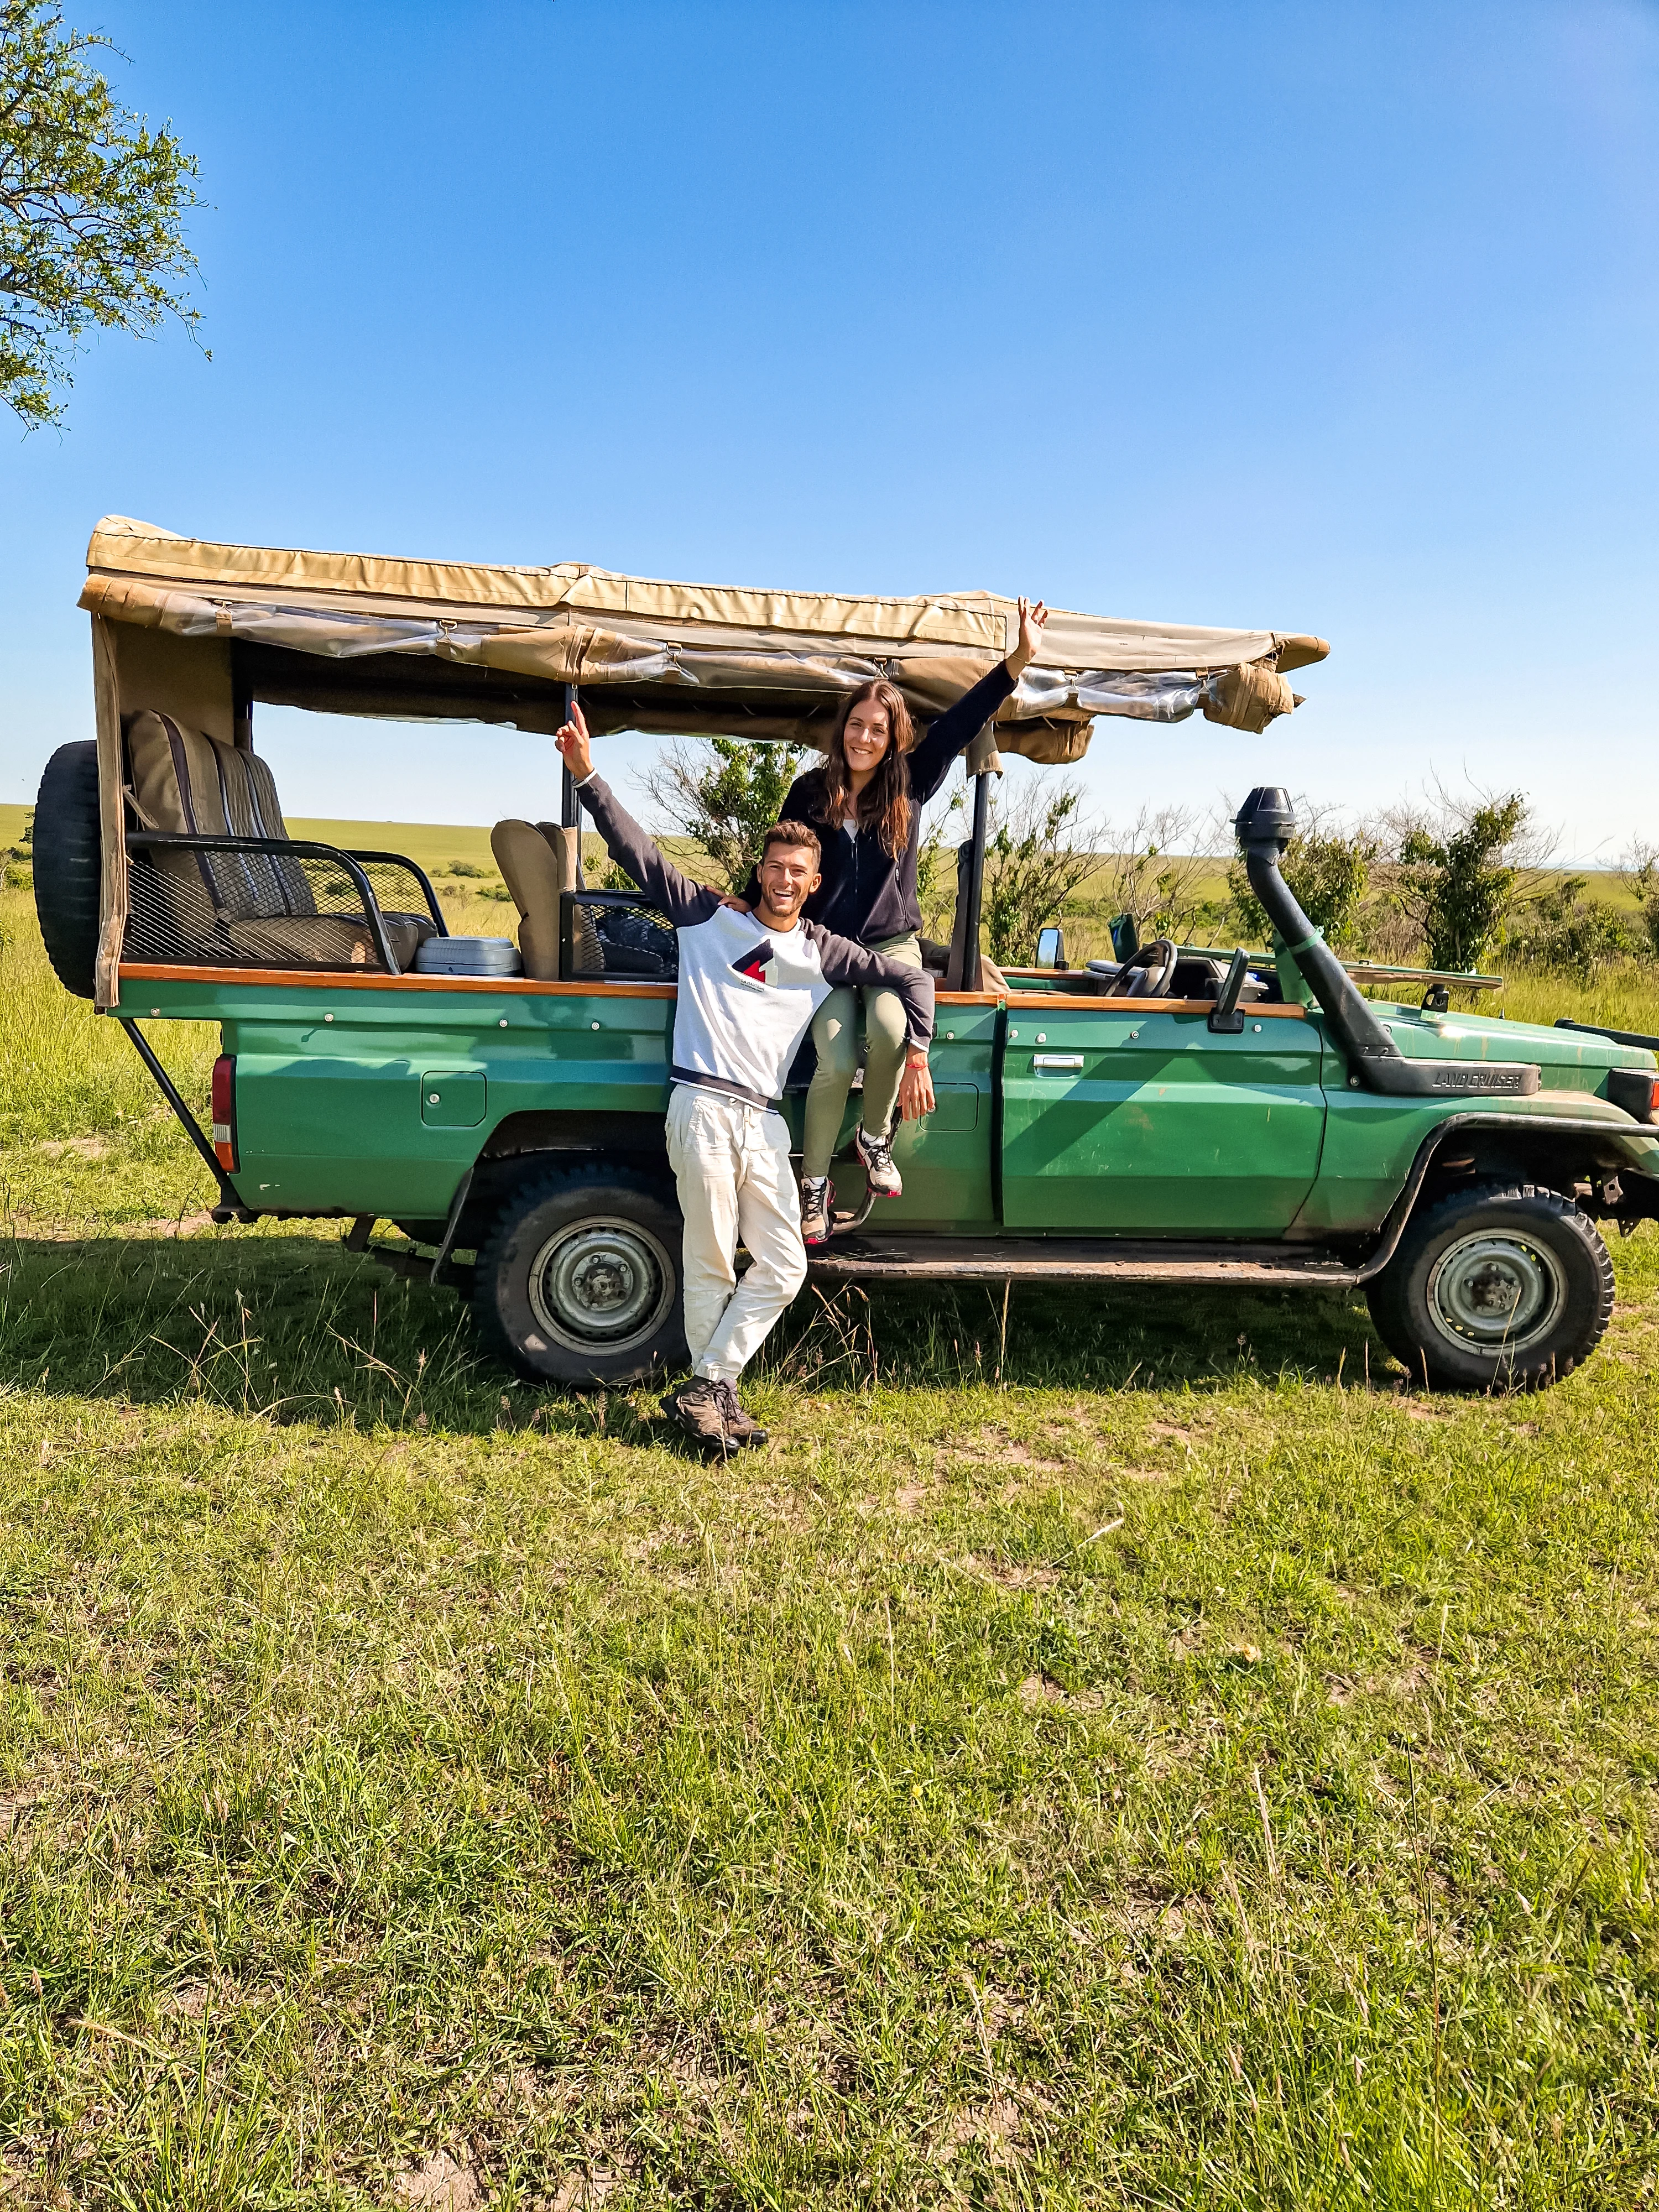 Our private car for the Masai Mara safari